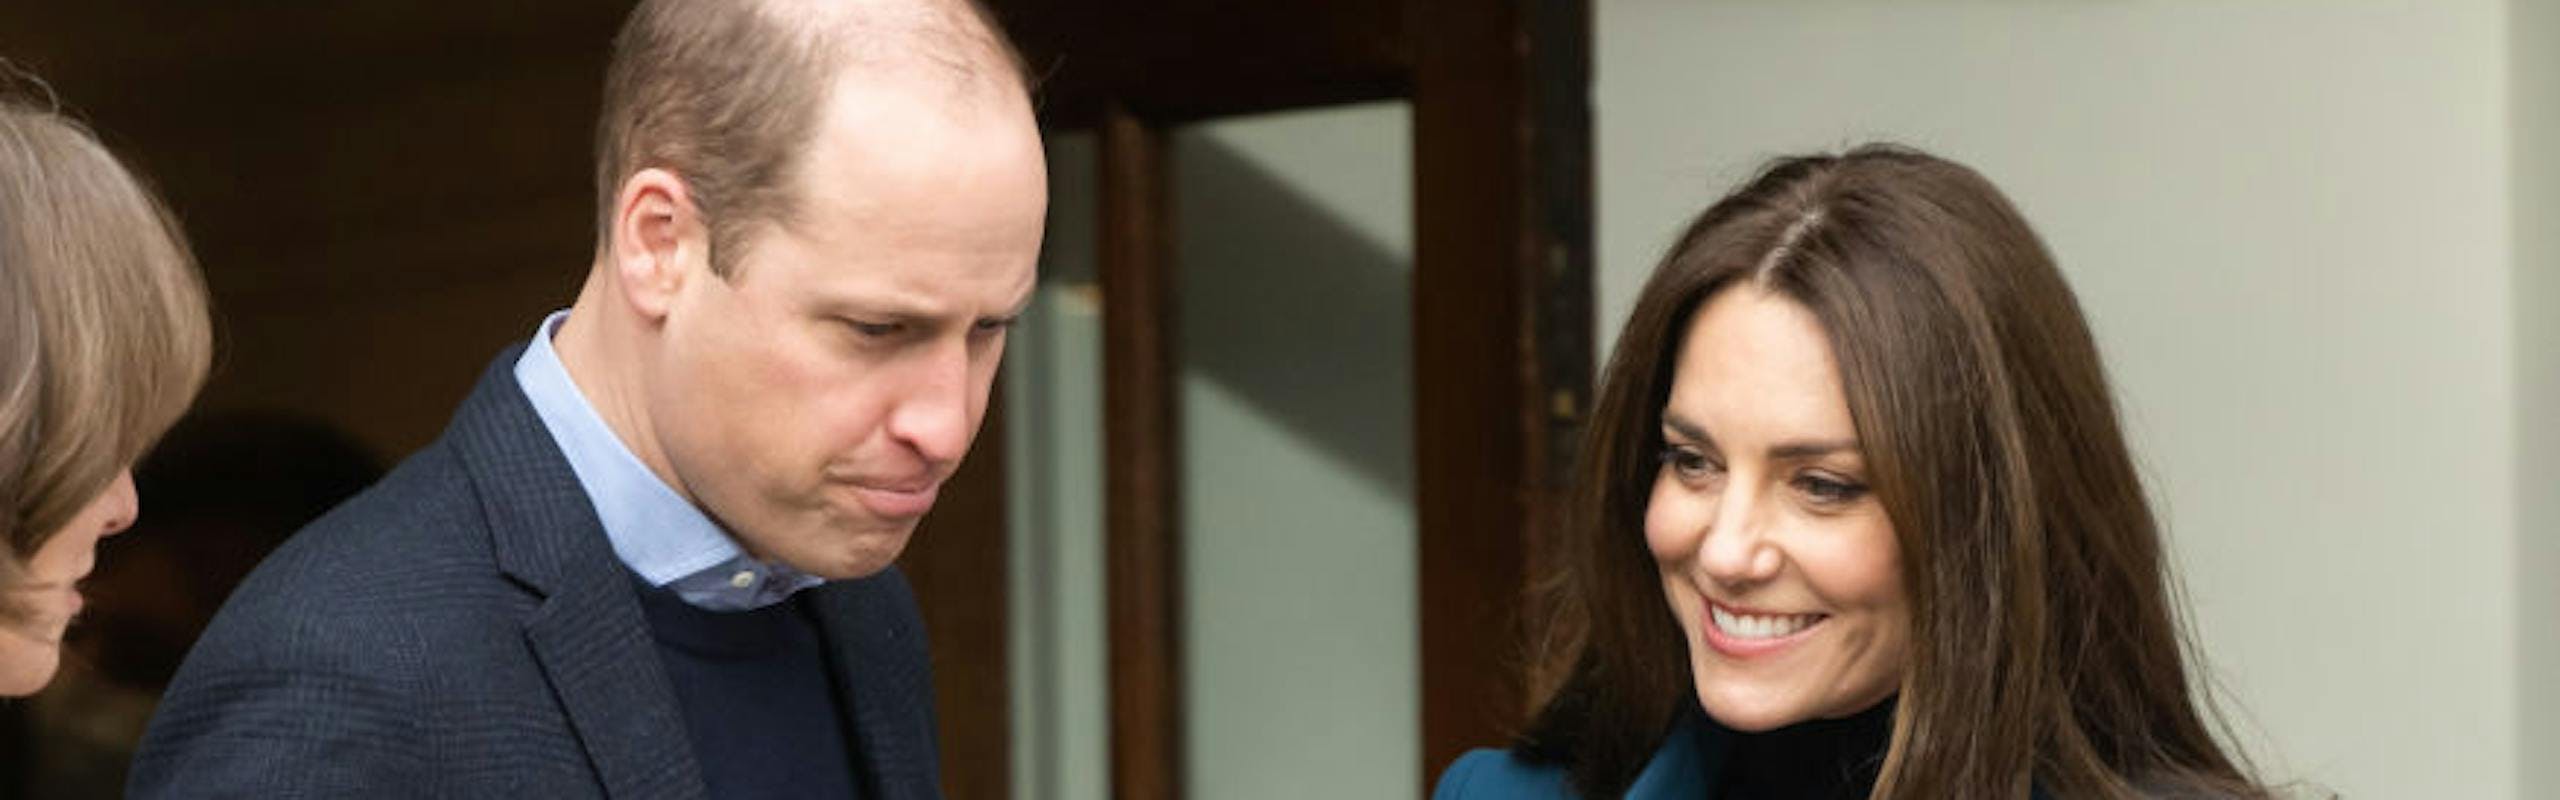 Príncipe William e Kate Middleton (Foto: Getty Images)